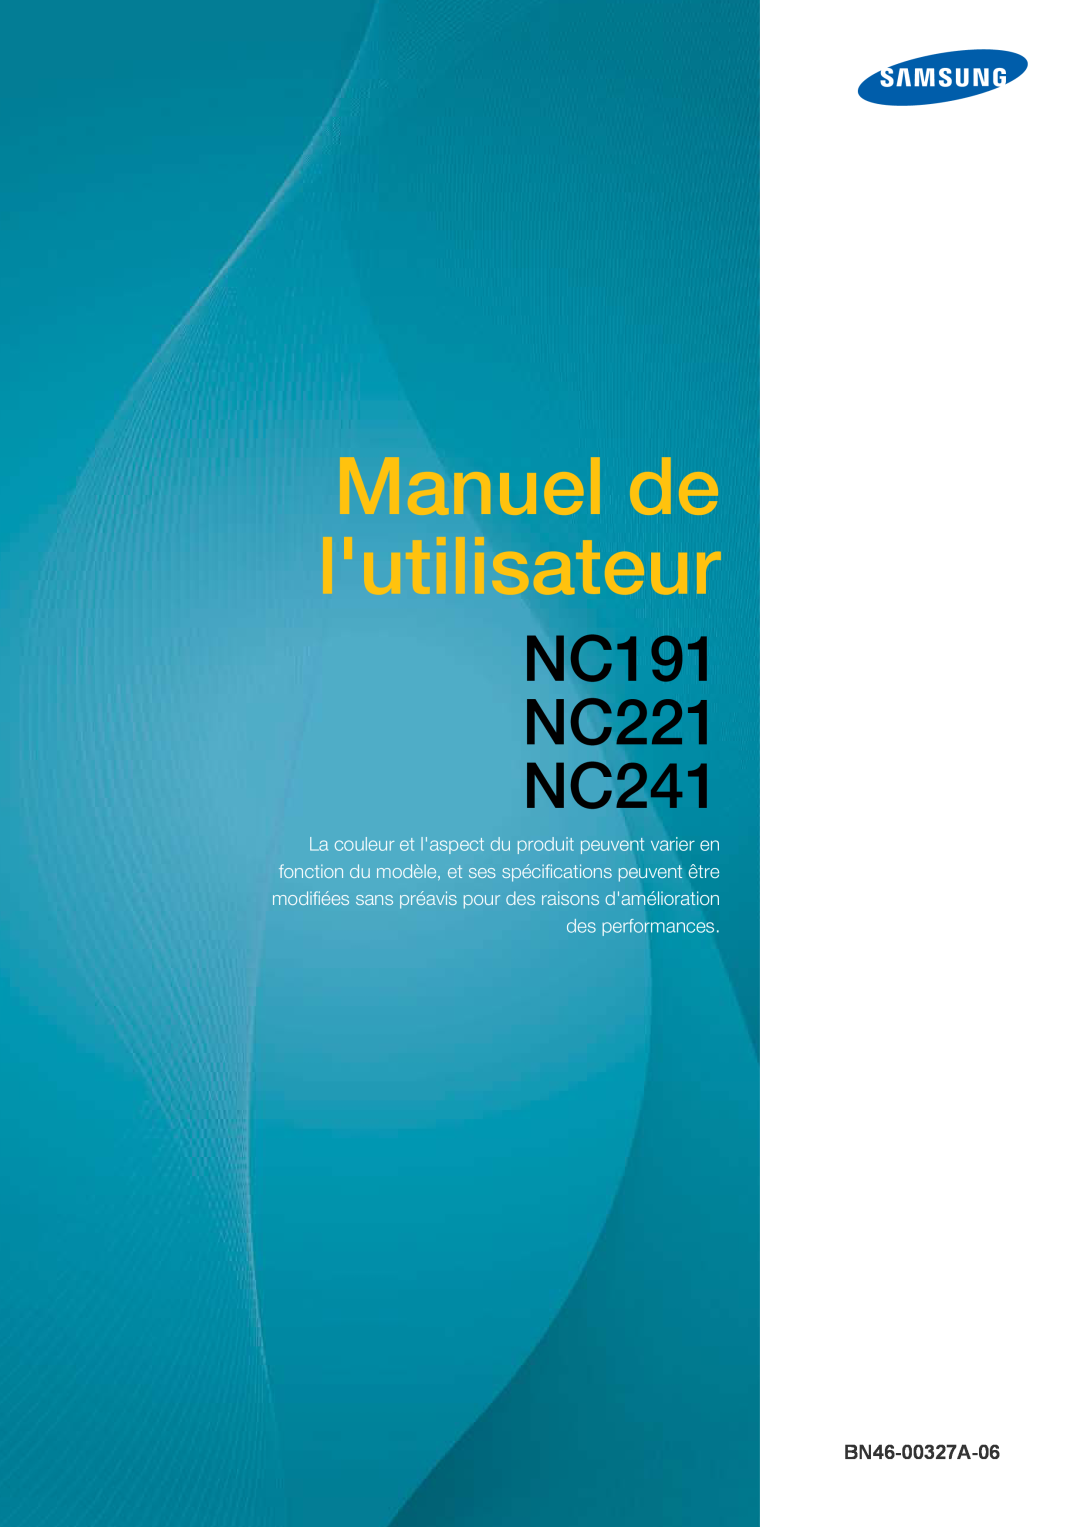 Samsung LF22NTBHBNM/EN manual Front / Avant, Quick Setup Guide, Guide d’installation rapide, Manuals / Manuel, Source Auto 